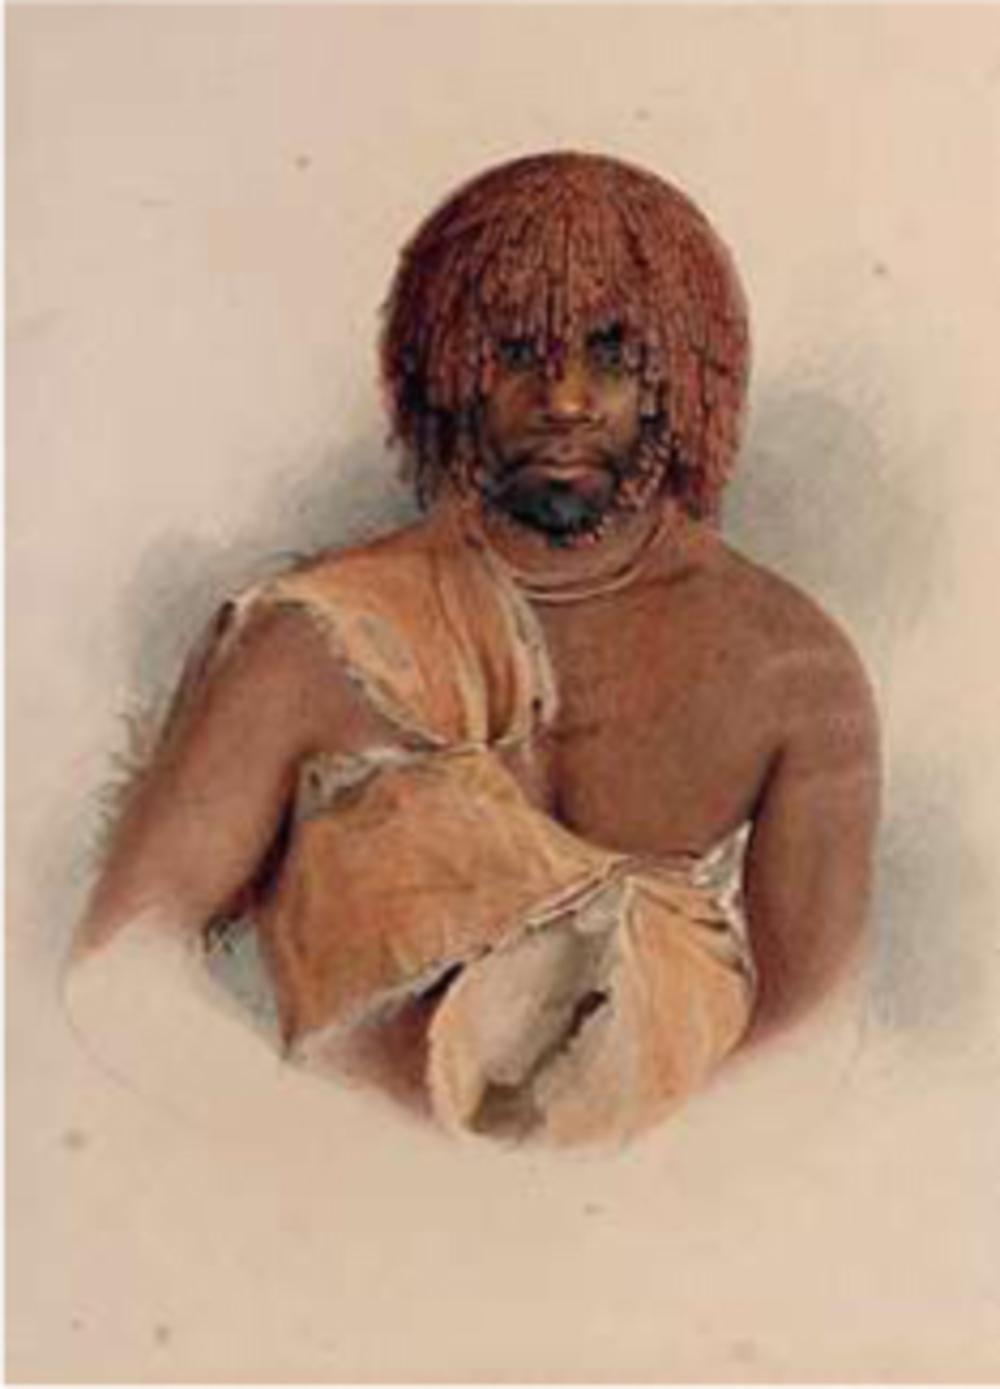 De Aboriginal Woureddy. Aquarel van Thomas Bock uit 1837. (Art Gallery of South Australia, Adelaide)